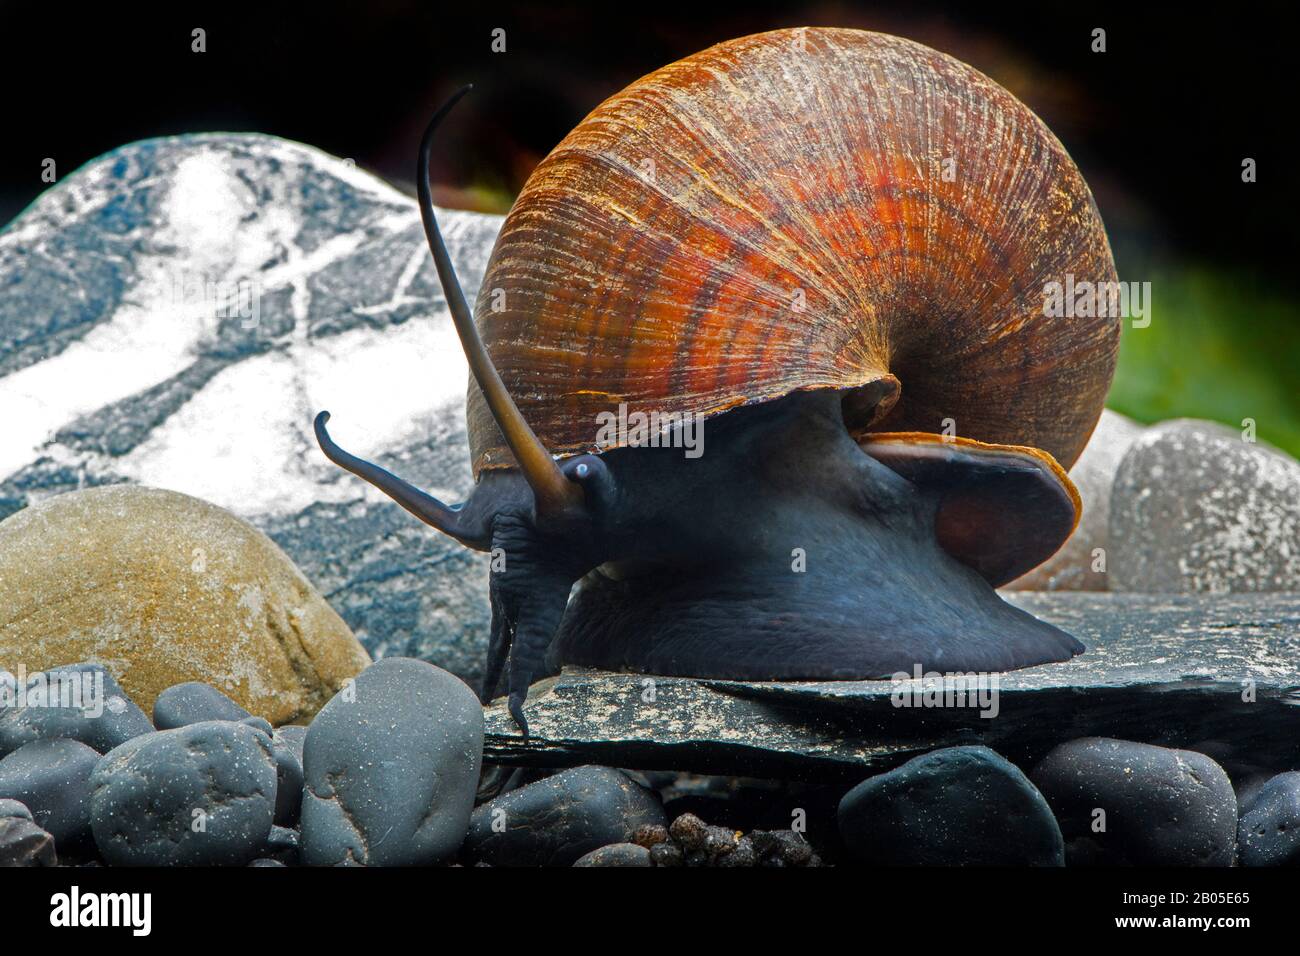 Asian Freshwater Snail (Pila ampullacea), on stones under water Stock Photo